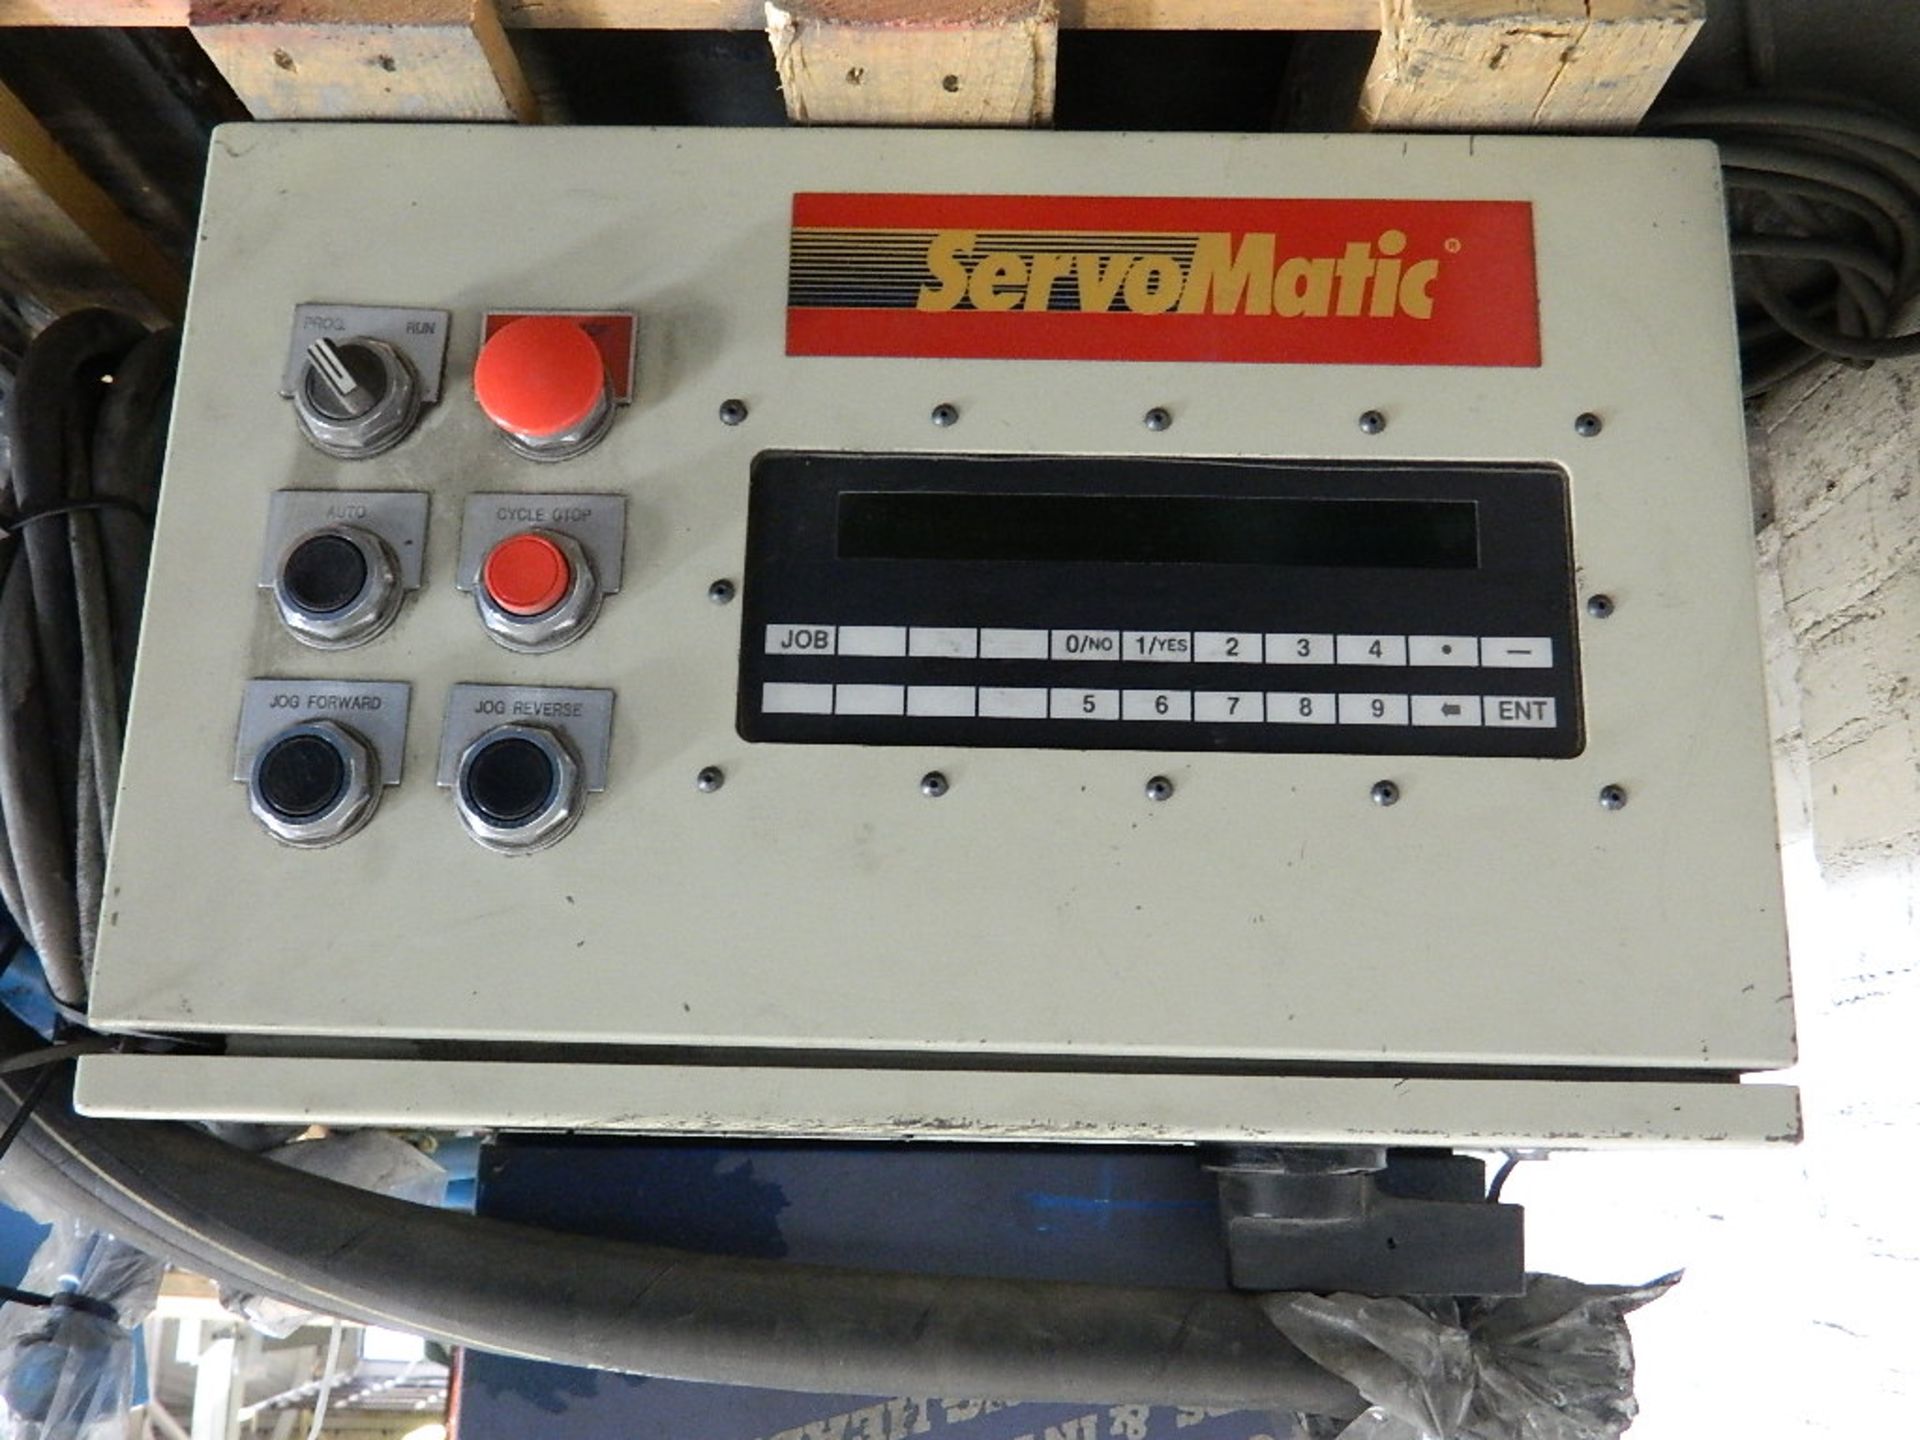 Servomatic Electronic Roll Feed Mdl SM-24 w/ 250 SPM, 250 FPM. - Image 2 of 3